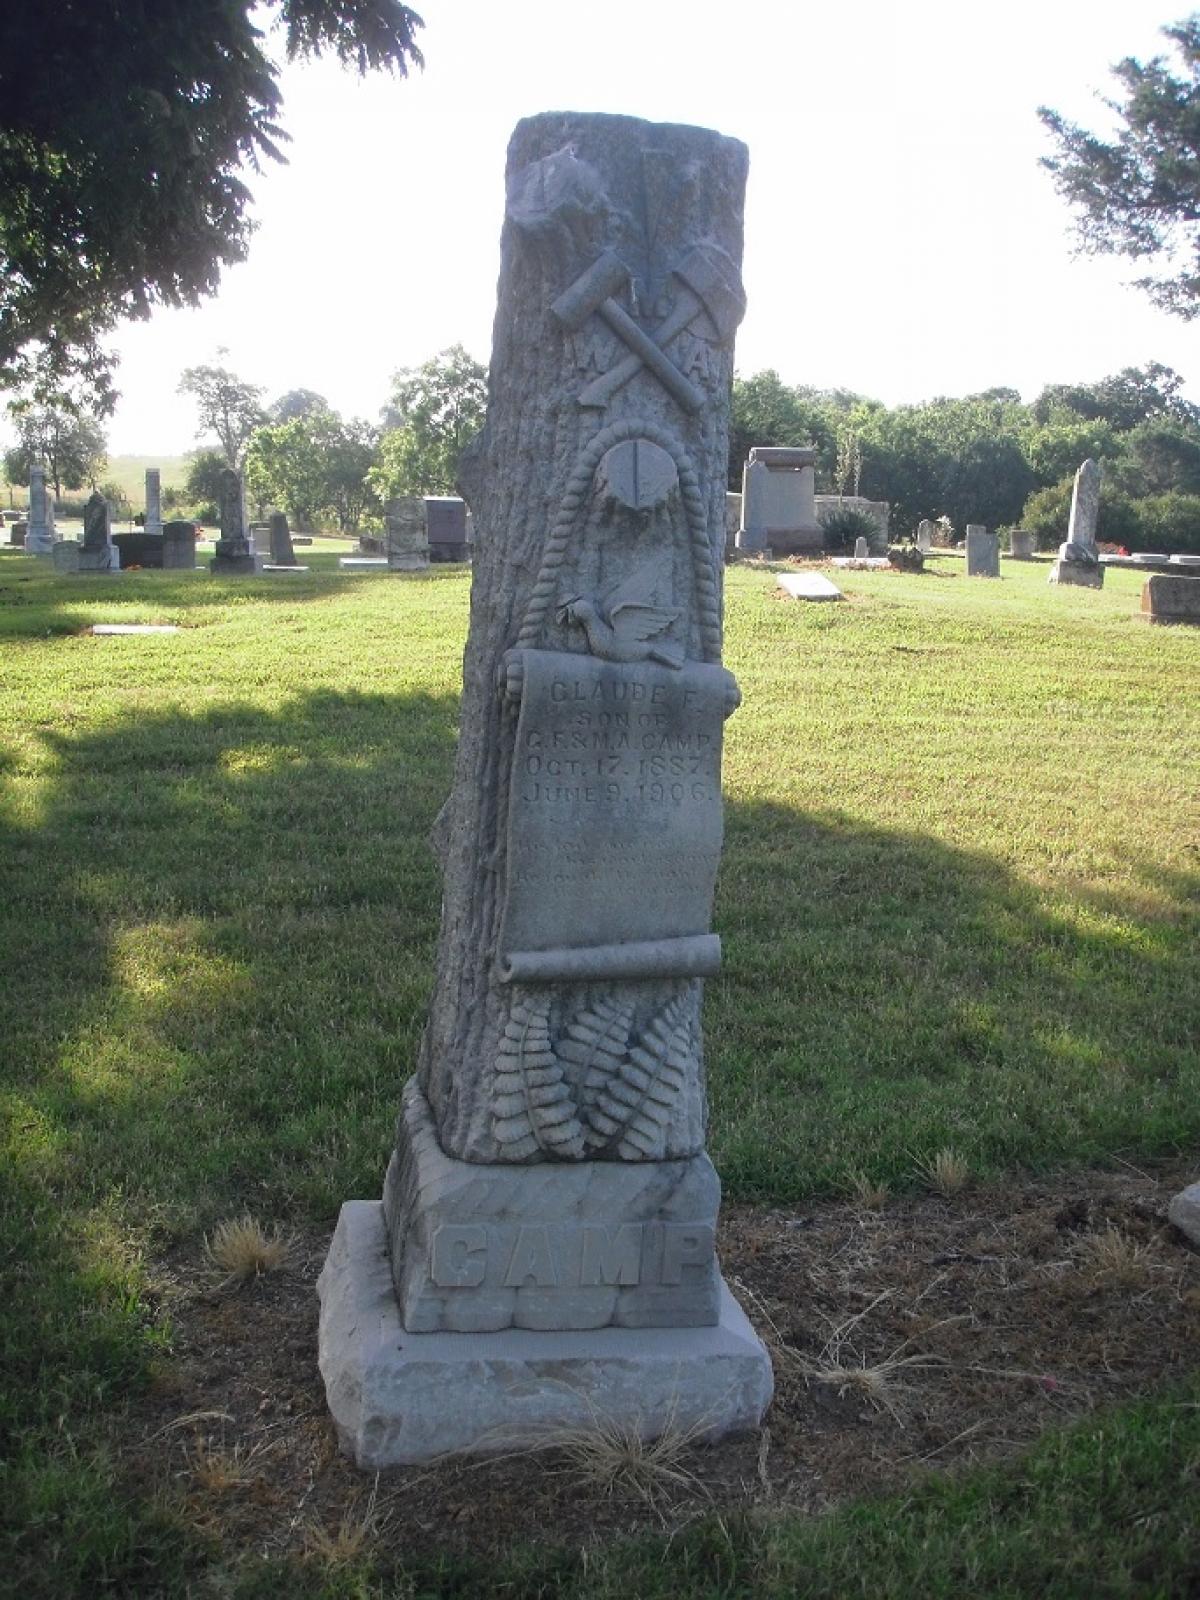 OK, Grove, Olympus Cemetery, Camp, Claude F. Headstone